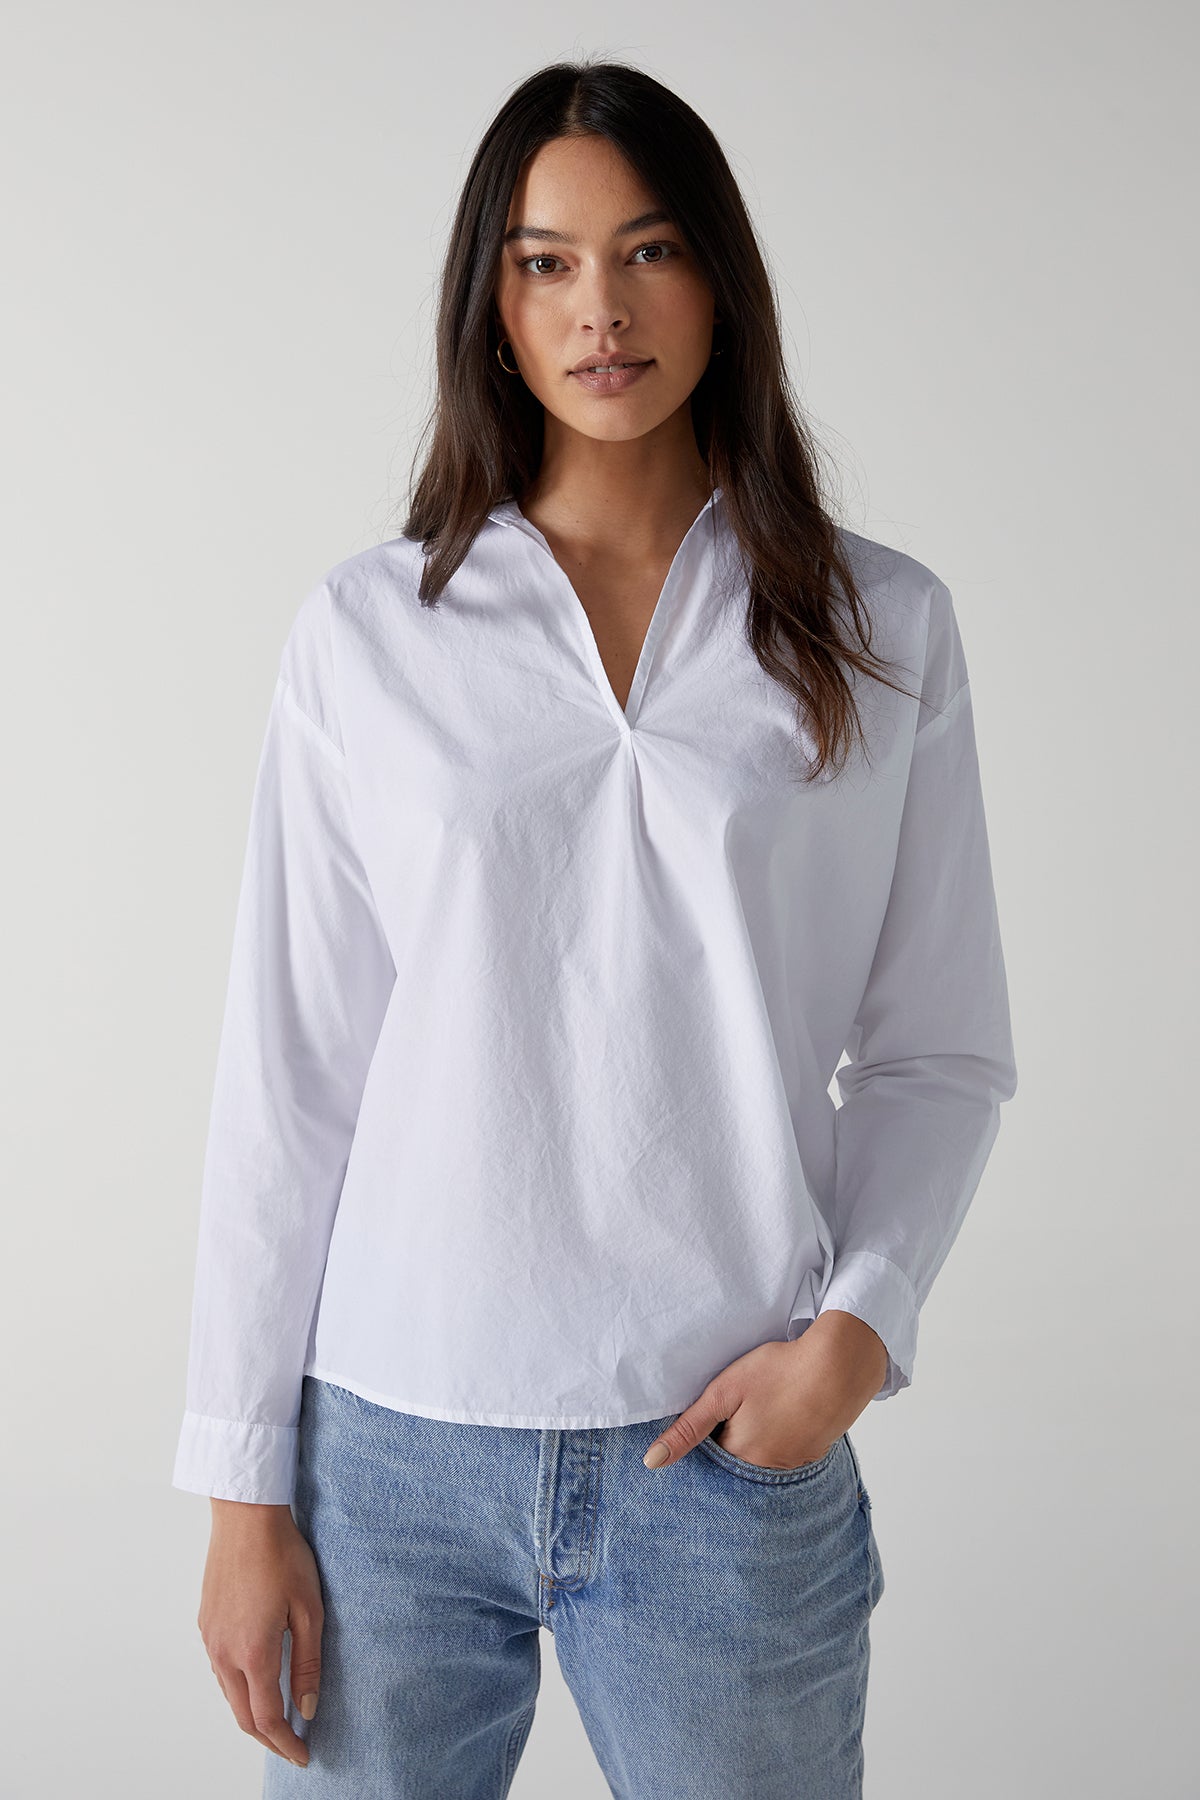 Velvet by Jenny Graham Brea Cotton Shirt in White with Blue Denim front-26002780094657